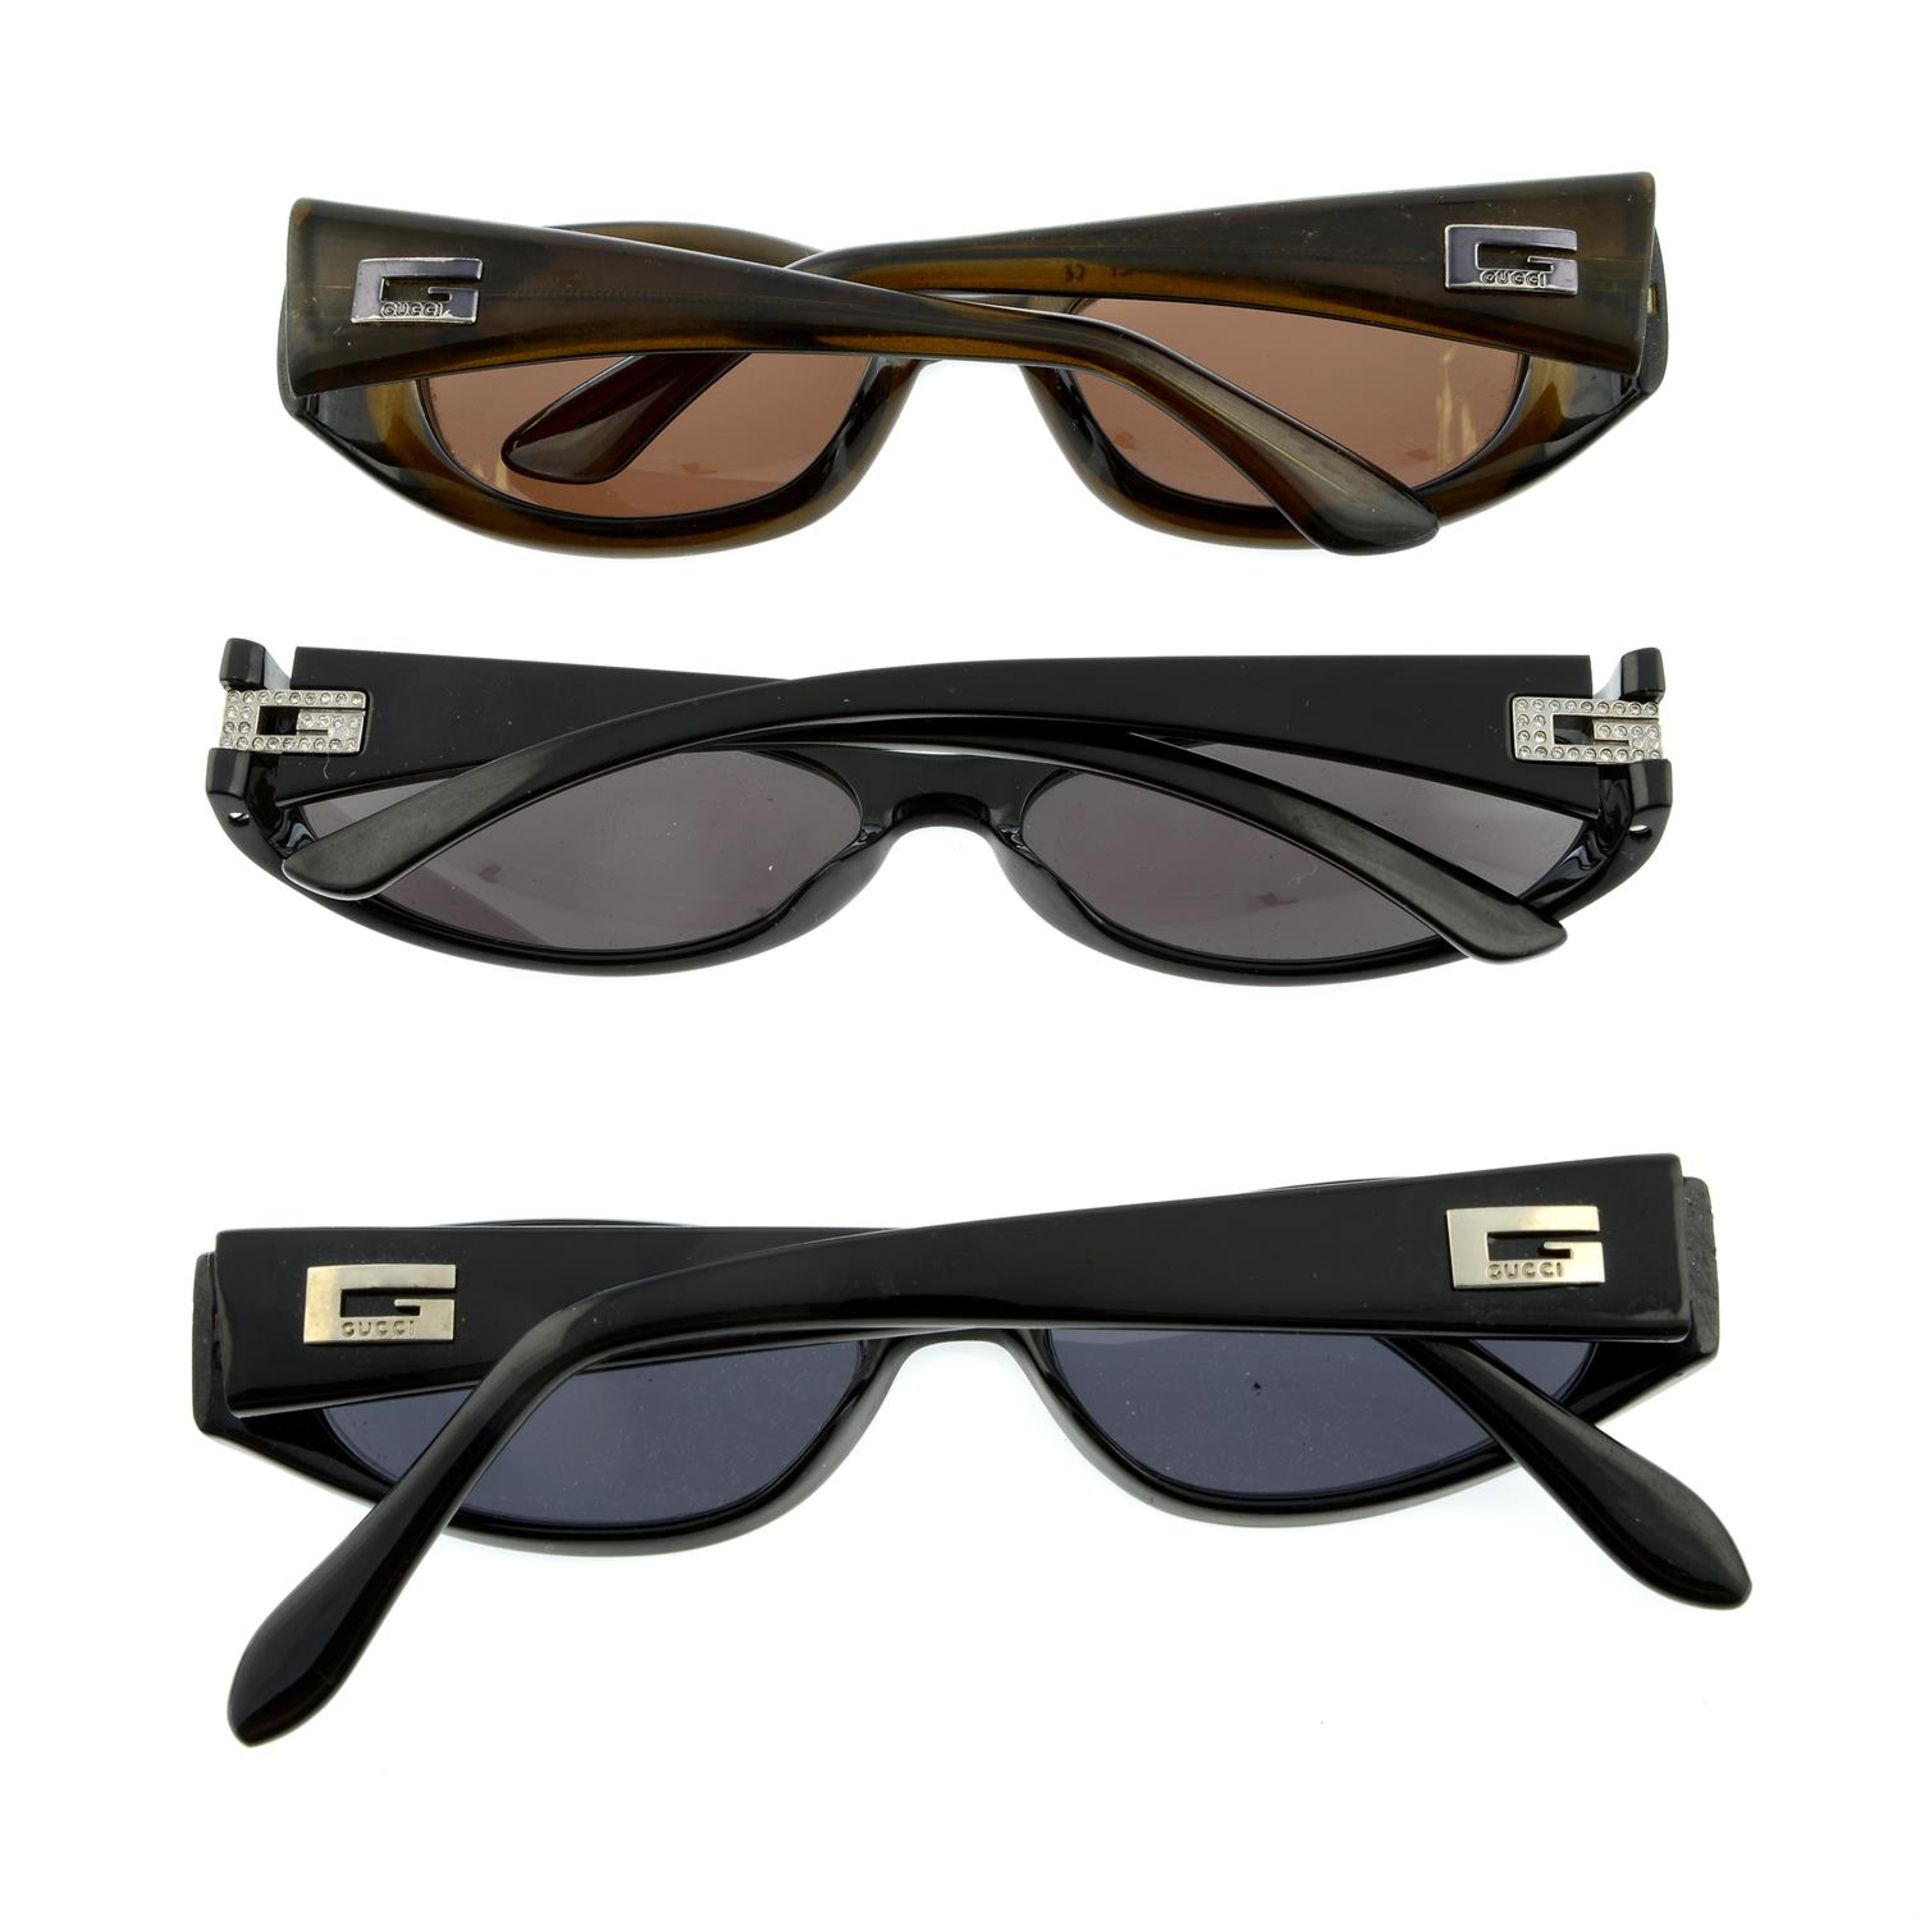 GUCCI - three pairs of sunglasses. - Image 2 of 3